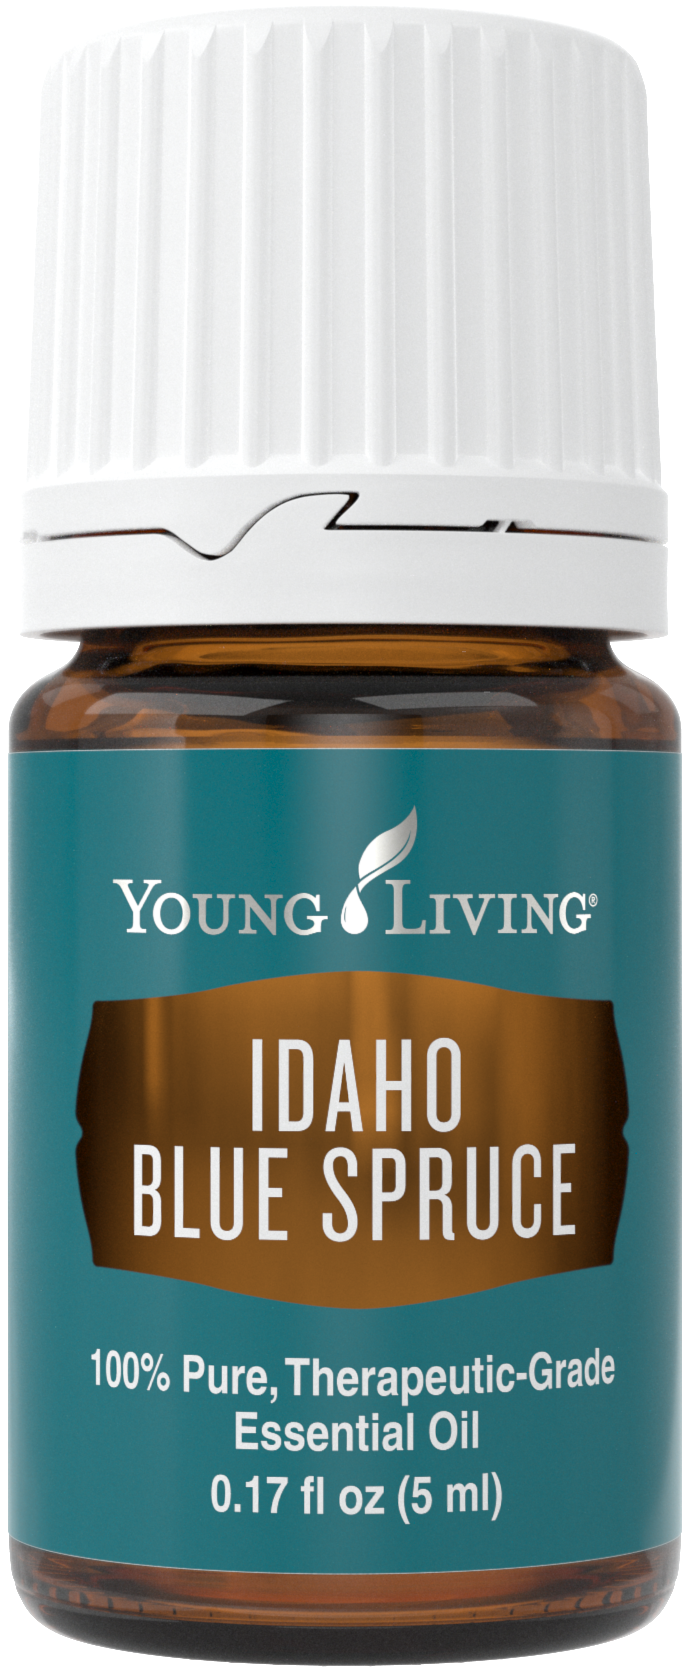 Idaho Blue Spruce.png